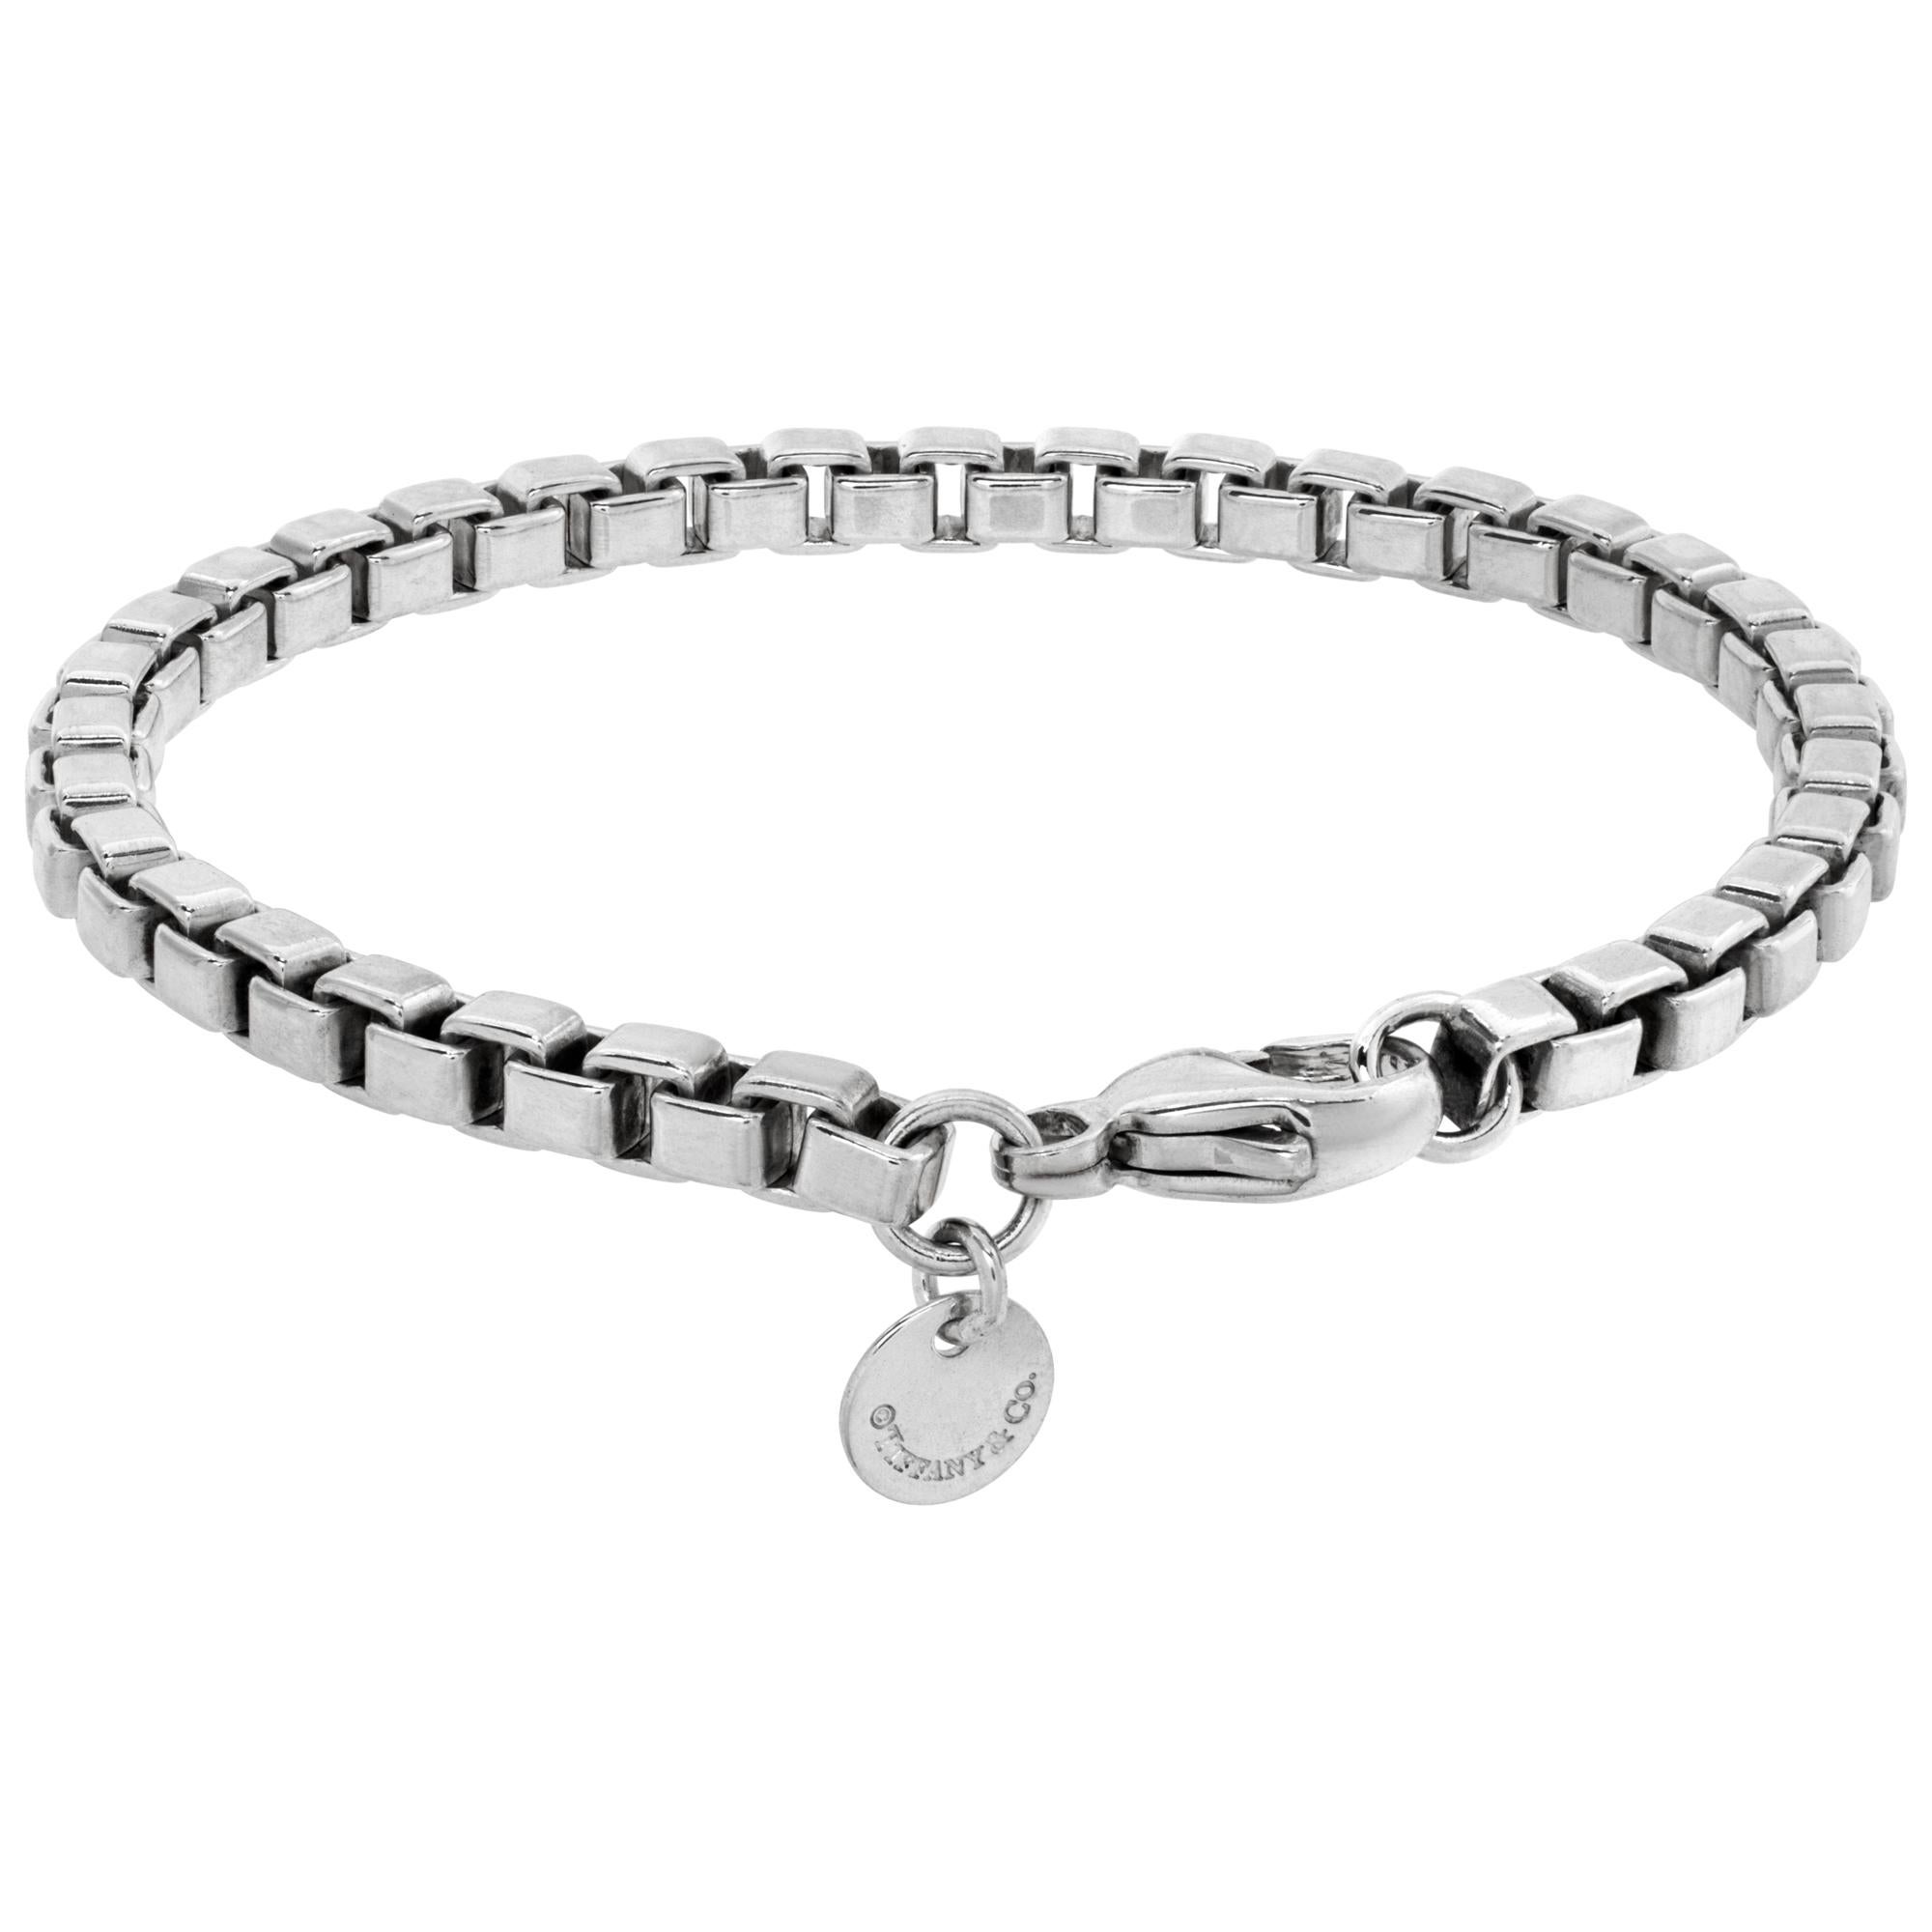 Tiffany & Co. Venetian Chain Link sterling silver bracelet. Length 6.5 inches. Width 3.7 mm.